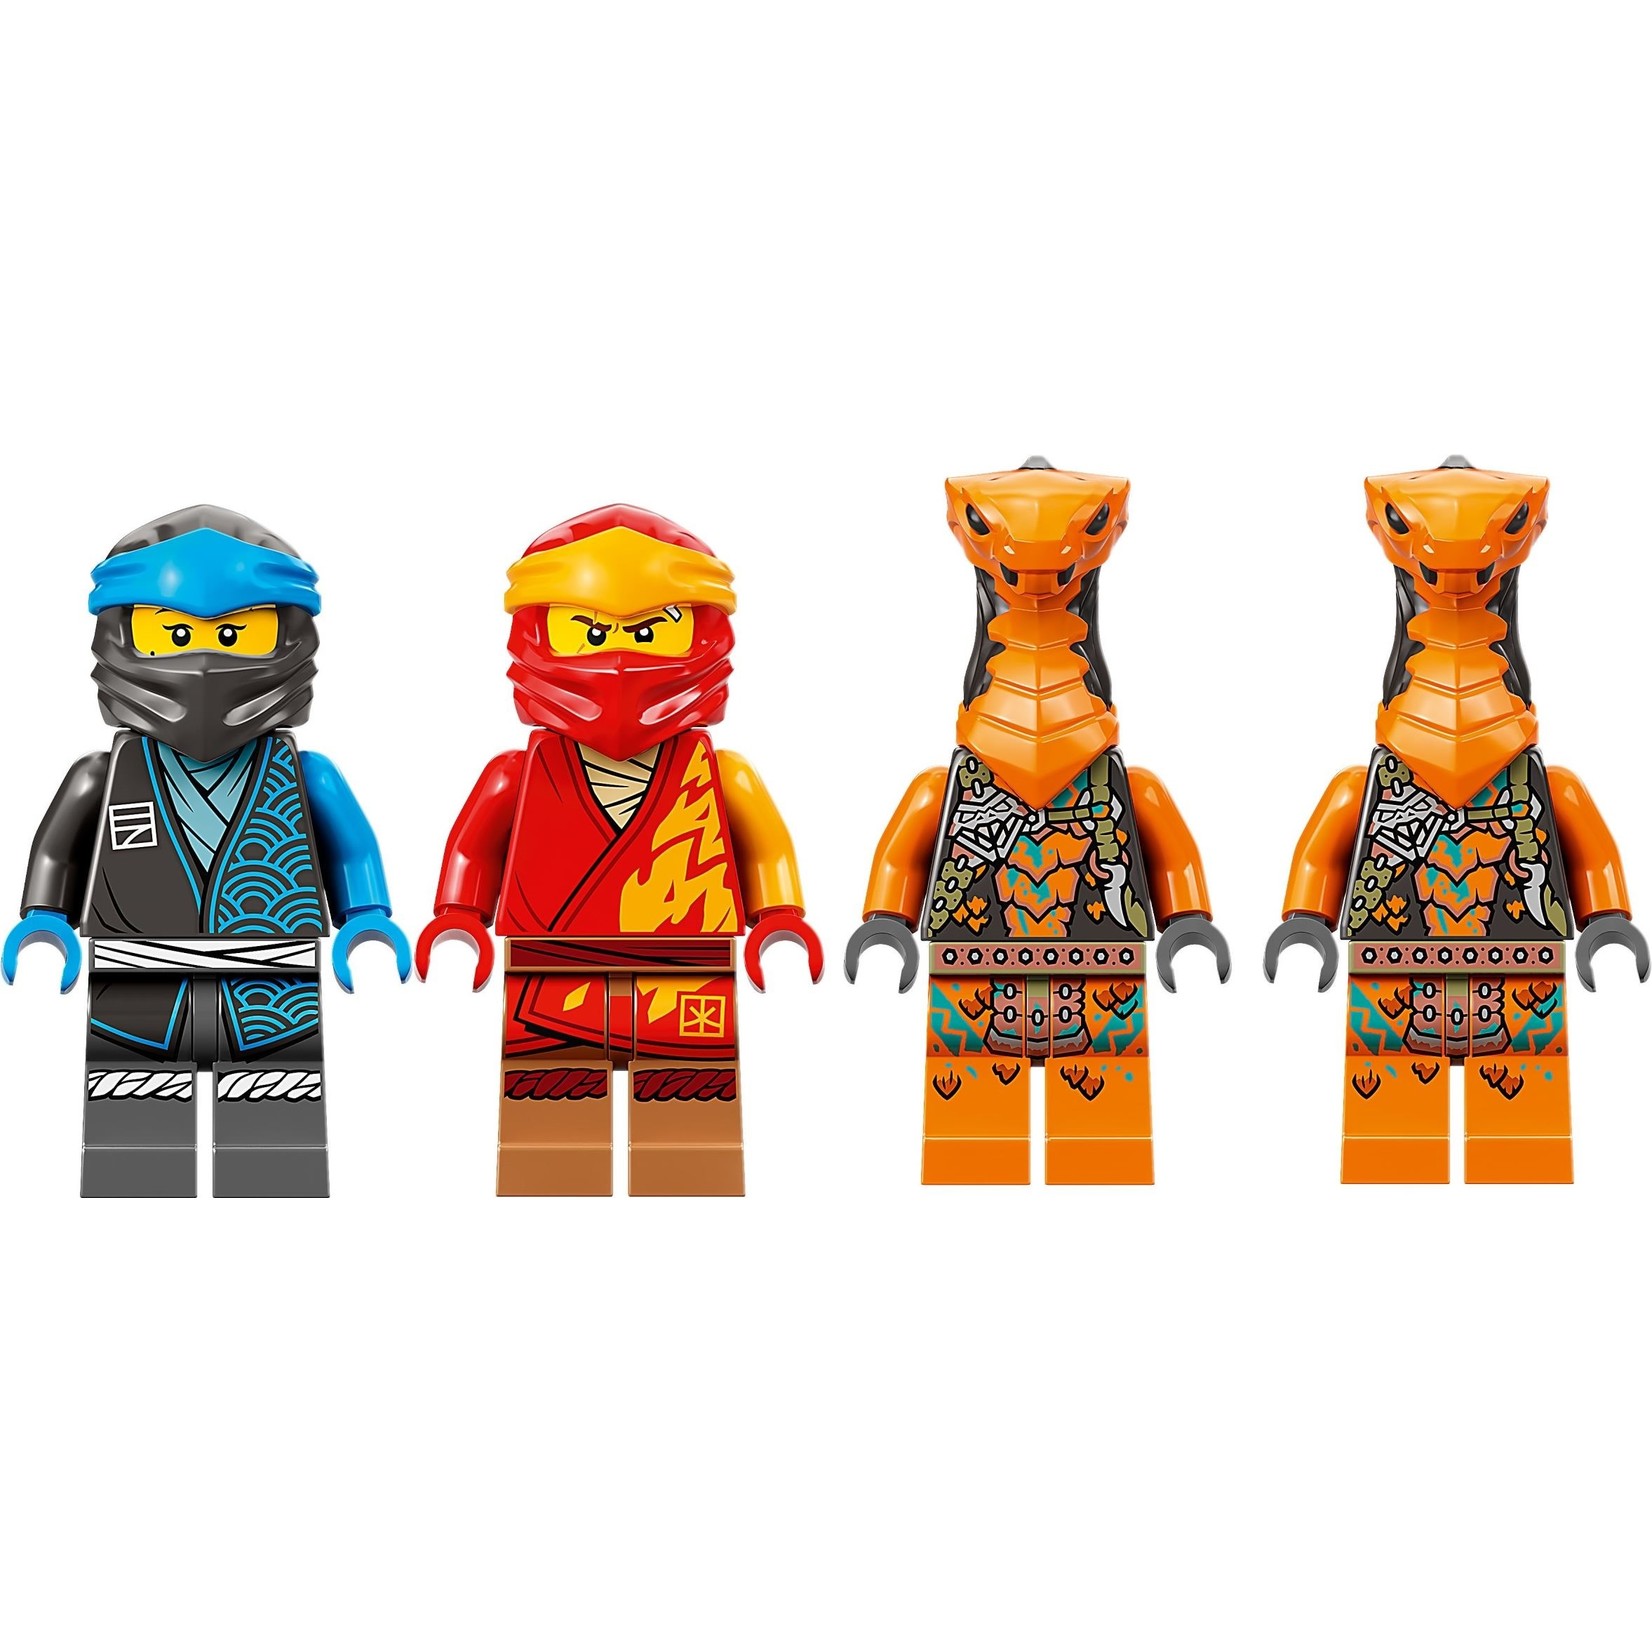 LEGO Ninja drakentempel - 71759